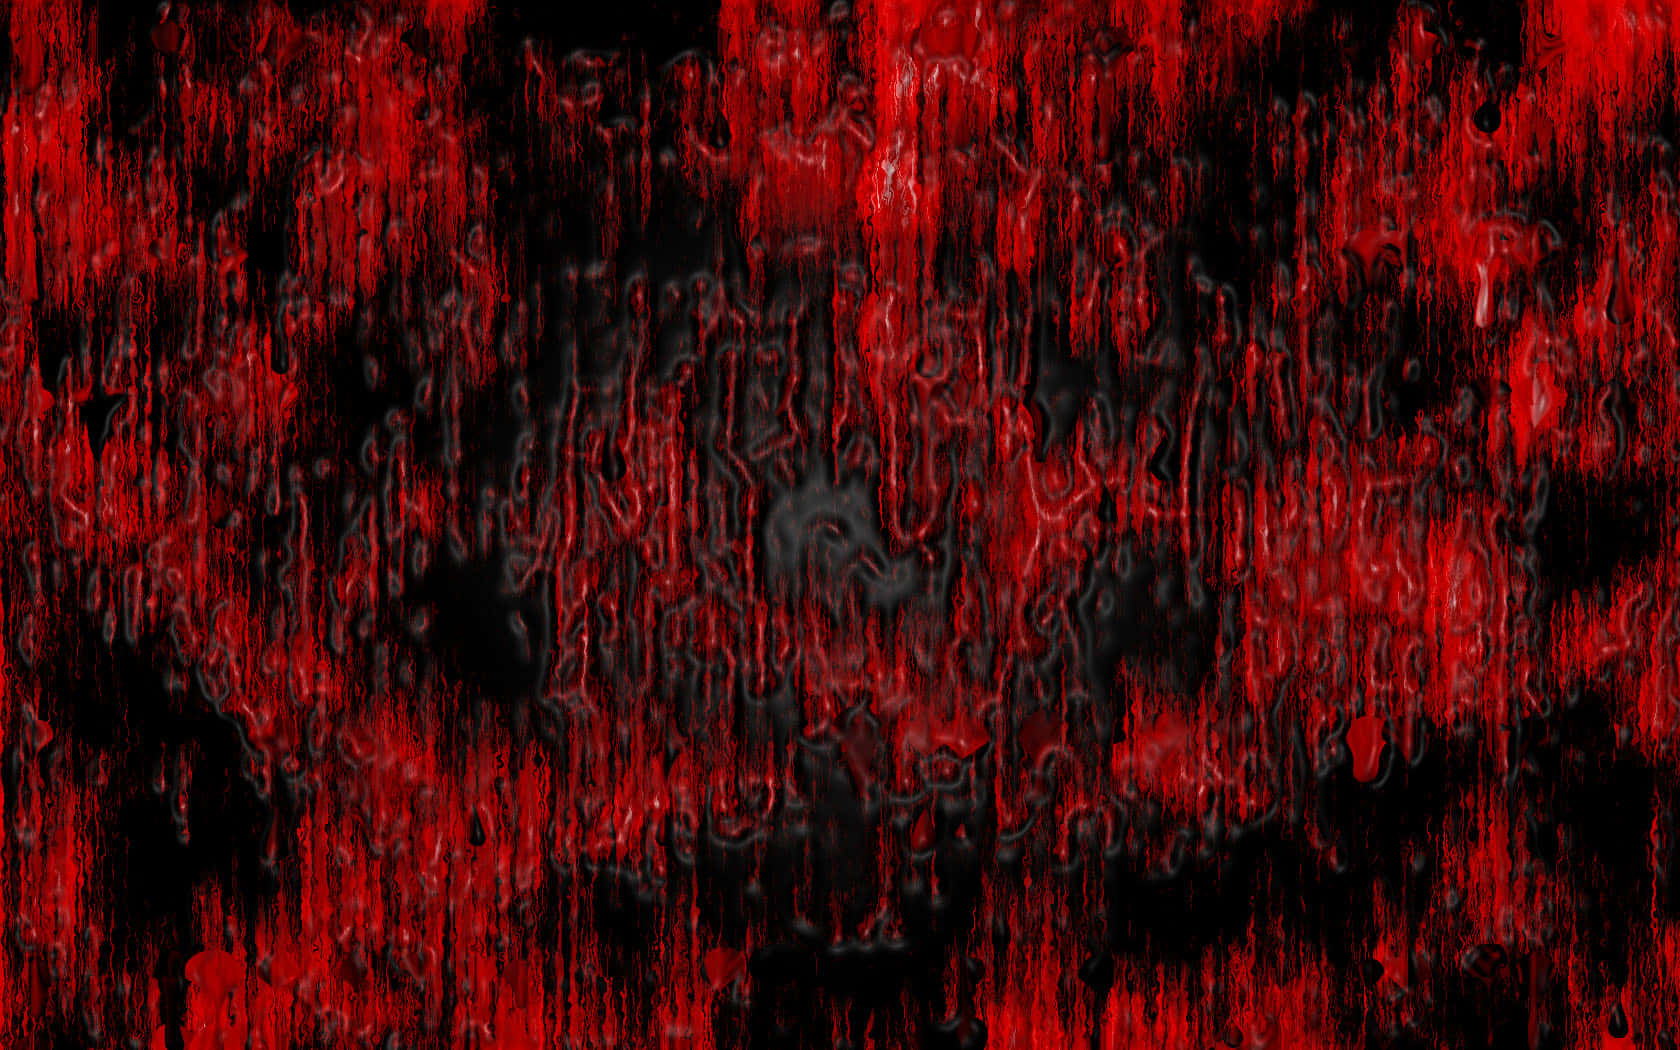 blood splatter wallpaper hd